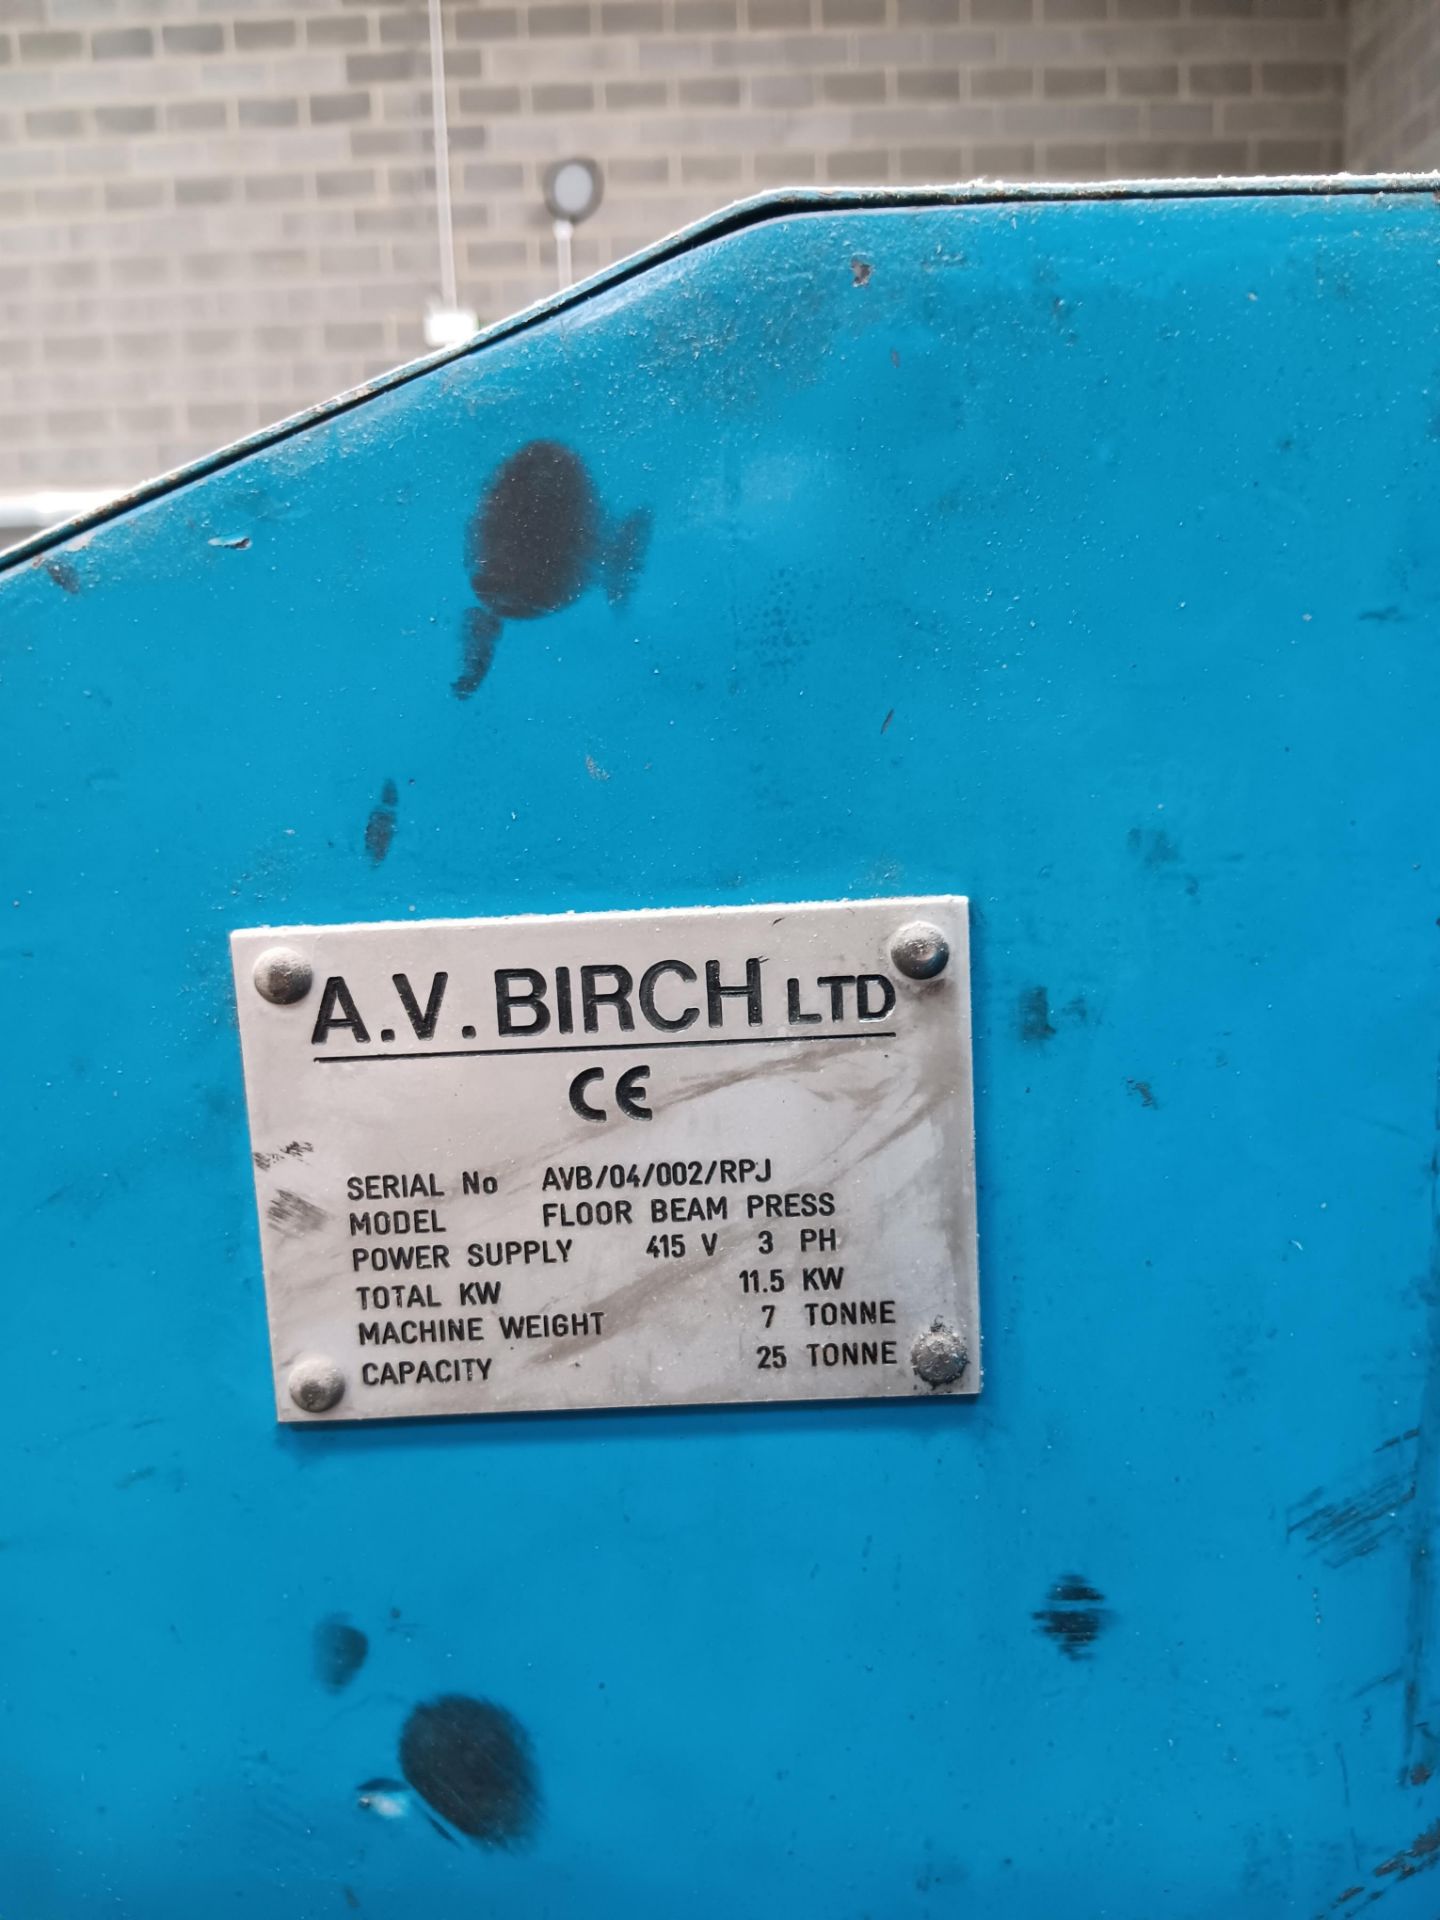 Birch floor beam press Serial number AVB/04/002/RPJ - Image 2 of 4